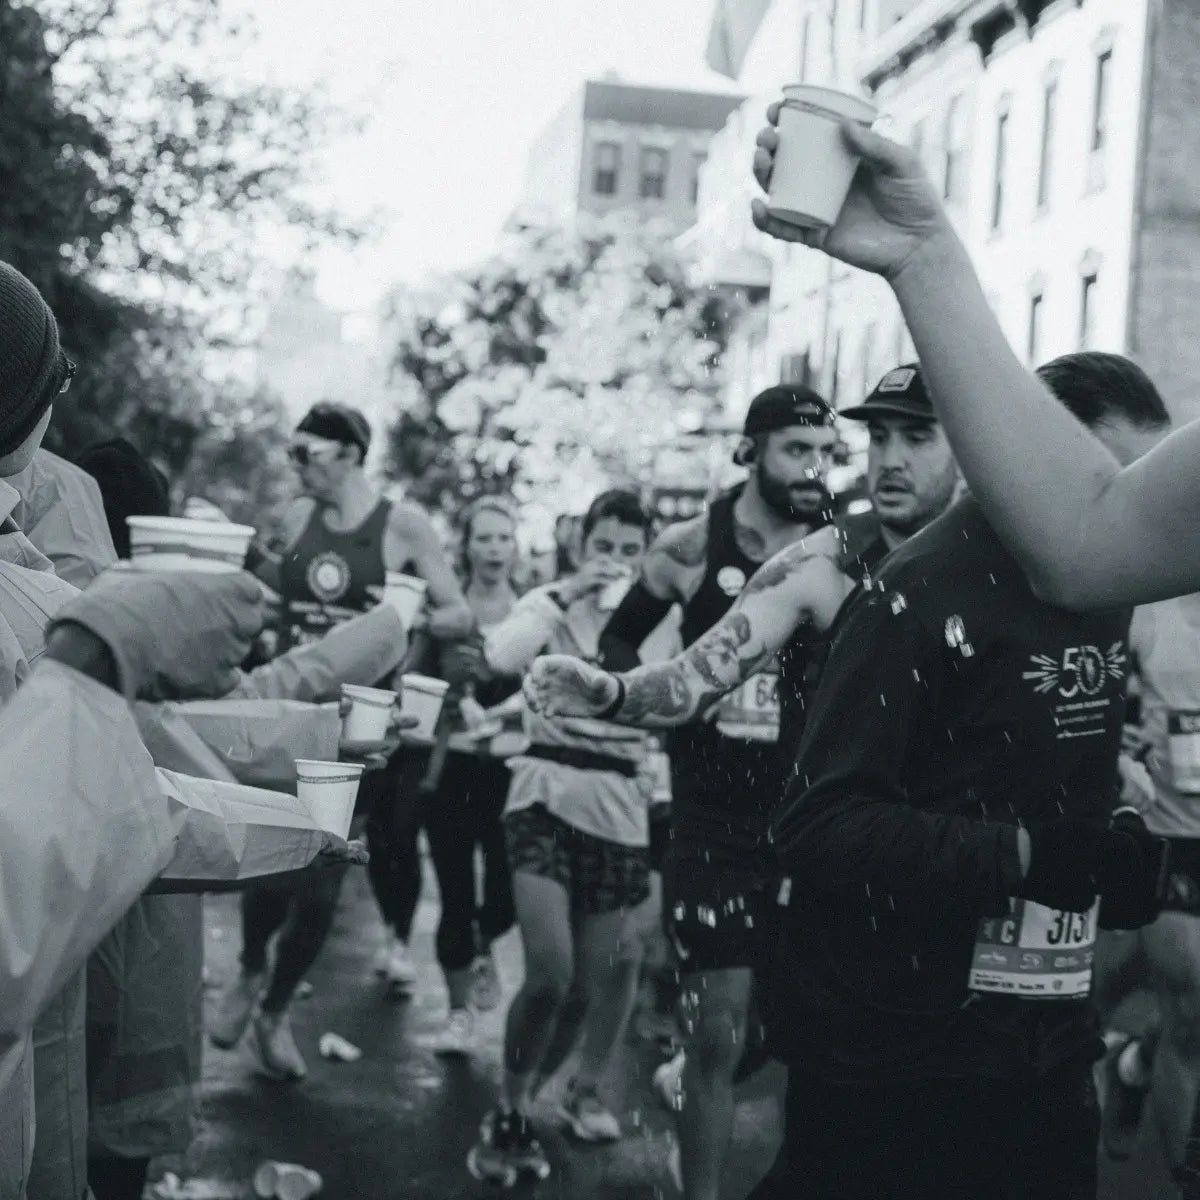 Volunteers offering marathon runners water during race